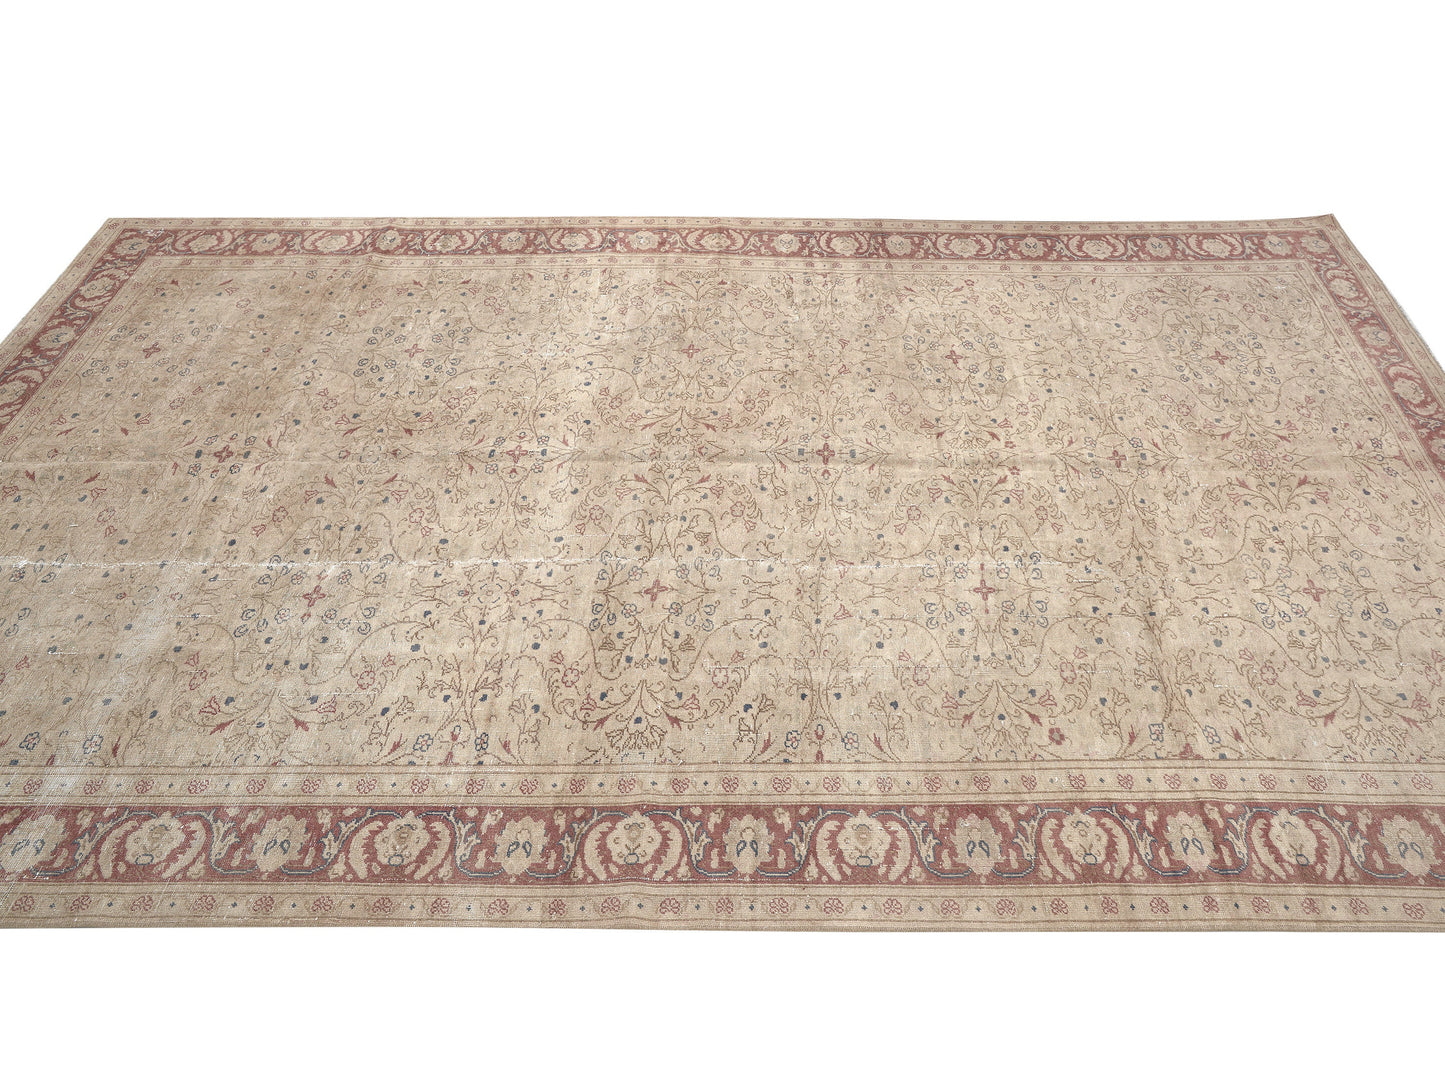 Turkish Rug, Vintage Rug, Oushak Rug, Handmade Rug, Area Rug, Living Room Rug, Carpet Rug, Rug 6x10, Turkish Carpet, Neutral Rug, 11454